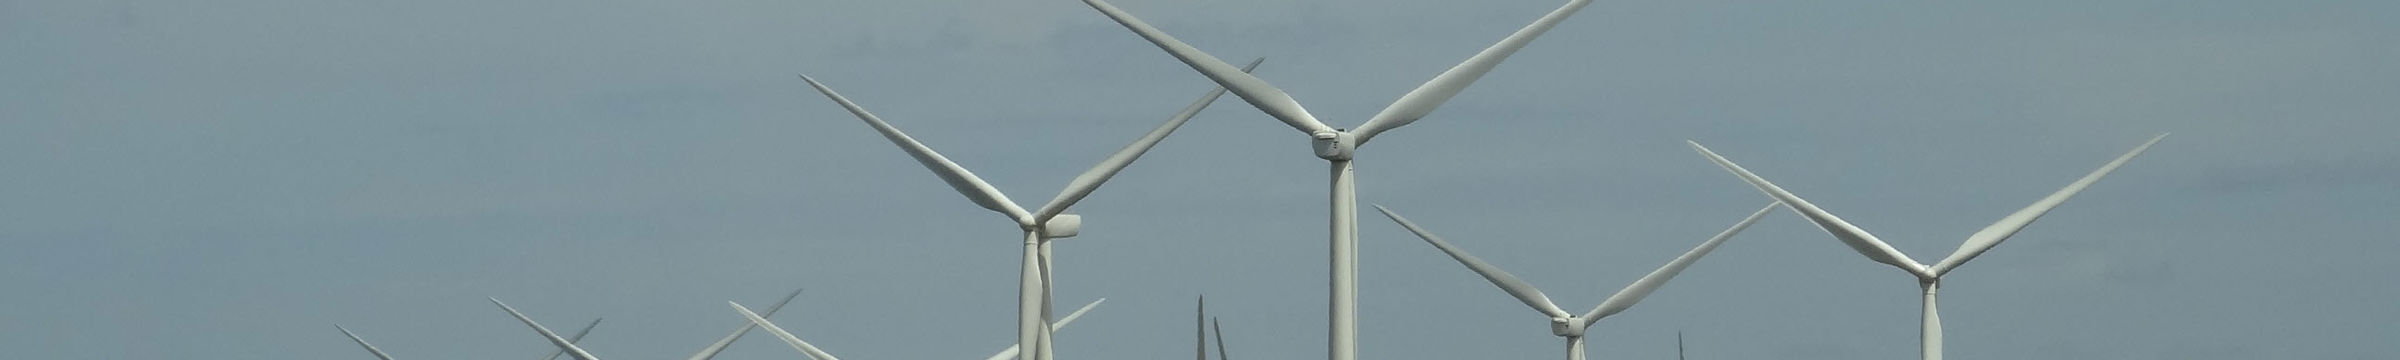 Statkrafts eksisterende vindpark i Bahia